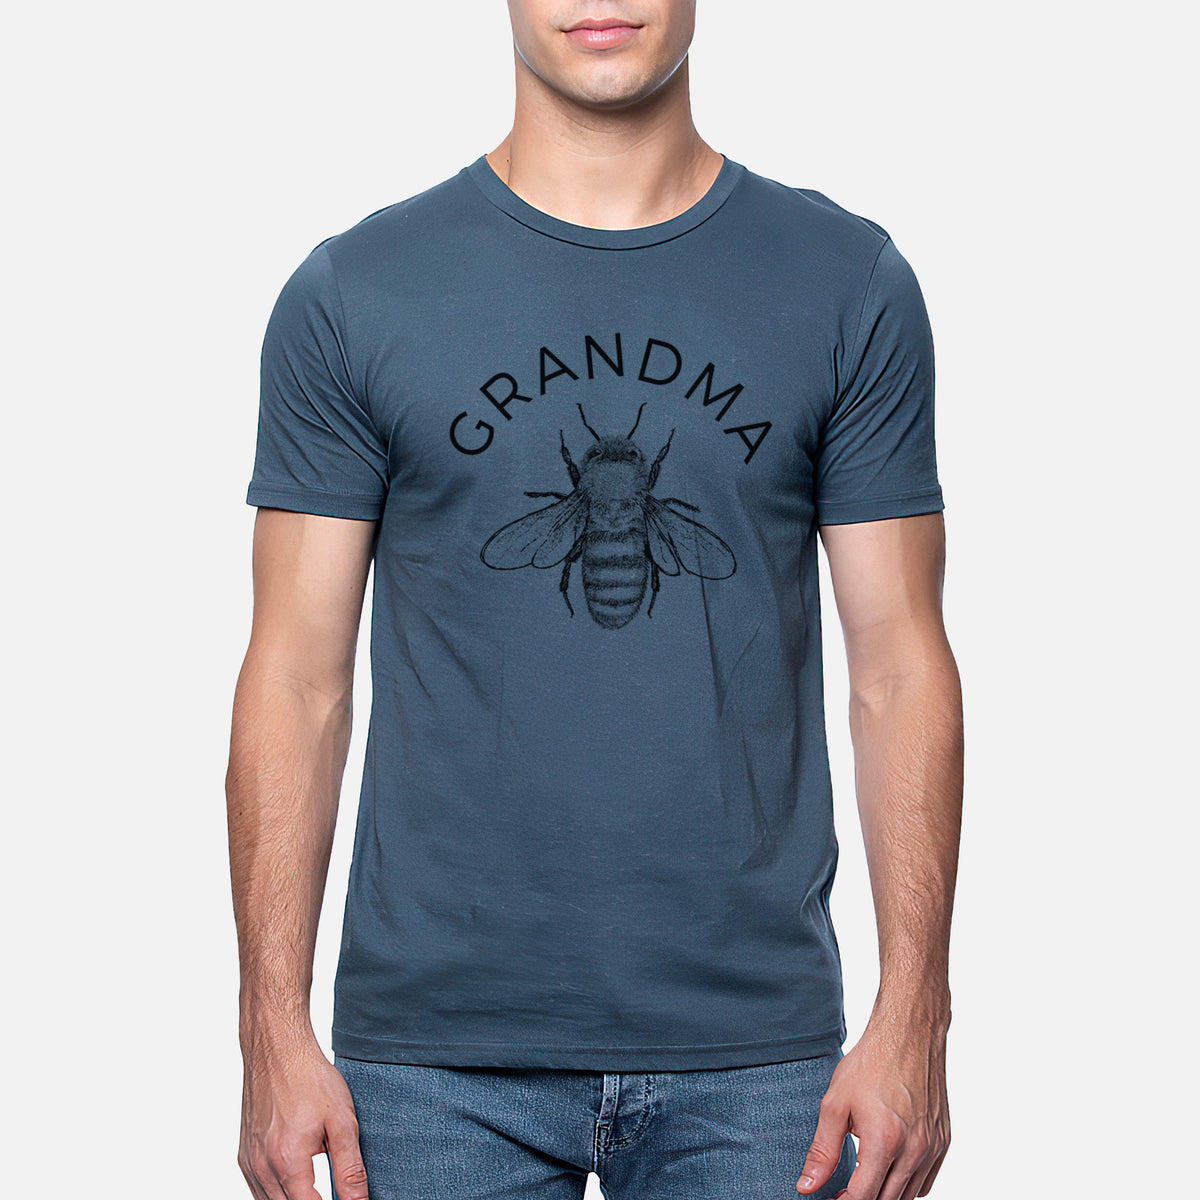 Grandma Bee - Unisex Crewneck - Made in USA - 100% Organic Cotton